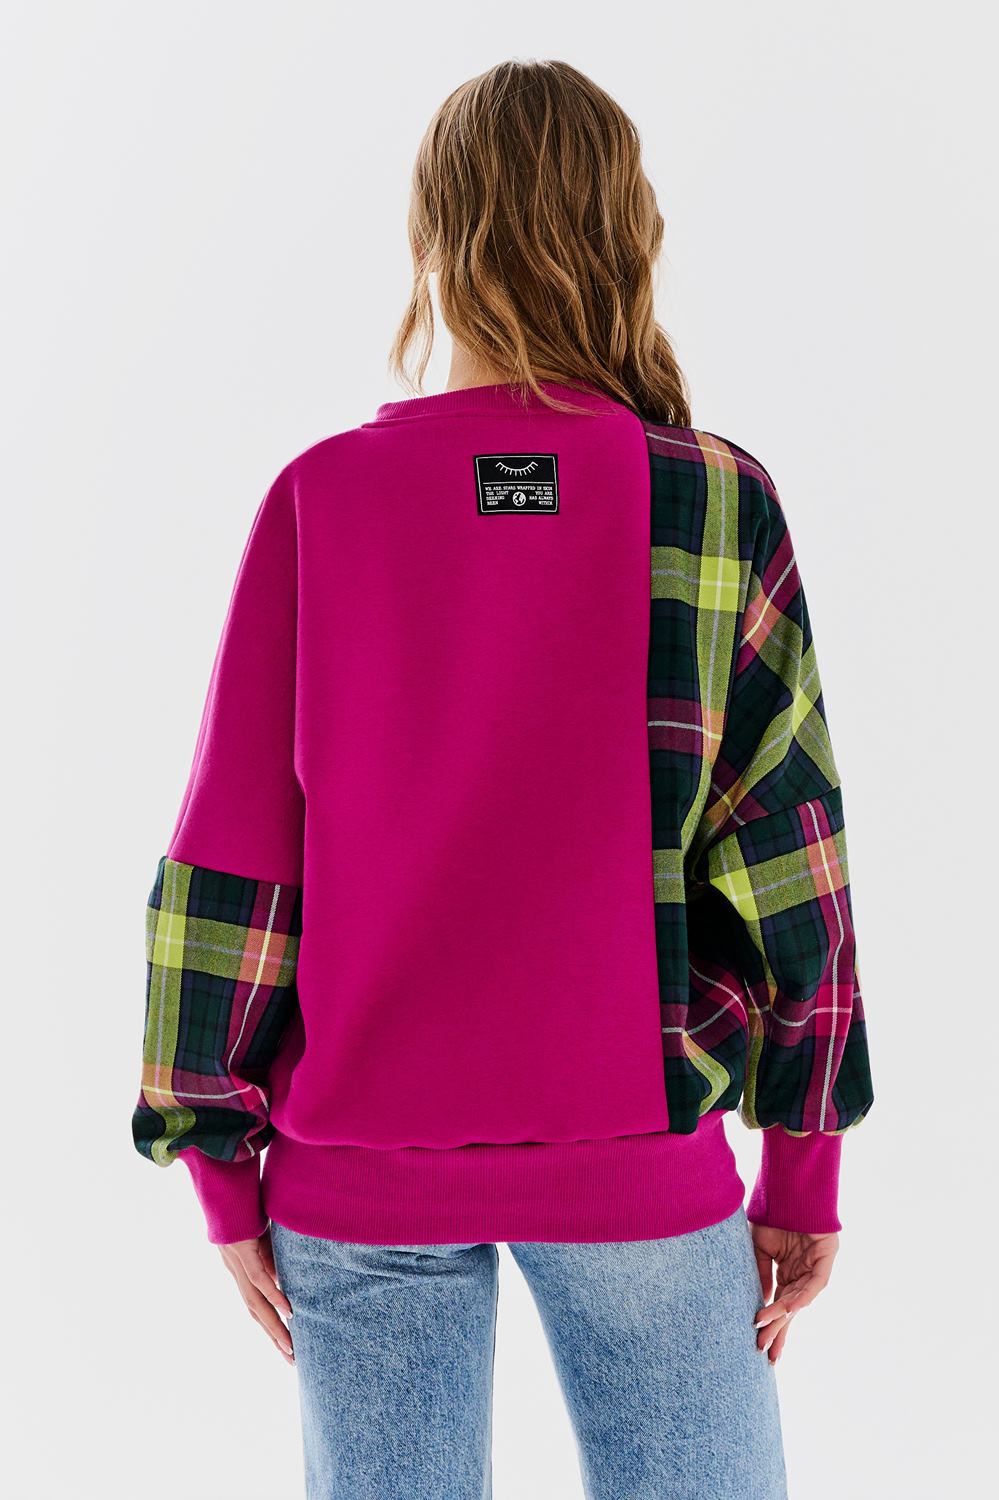 Follow Your Heart sweatshirt in blended fabrics